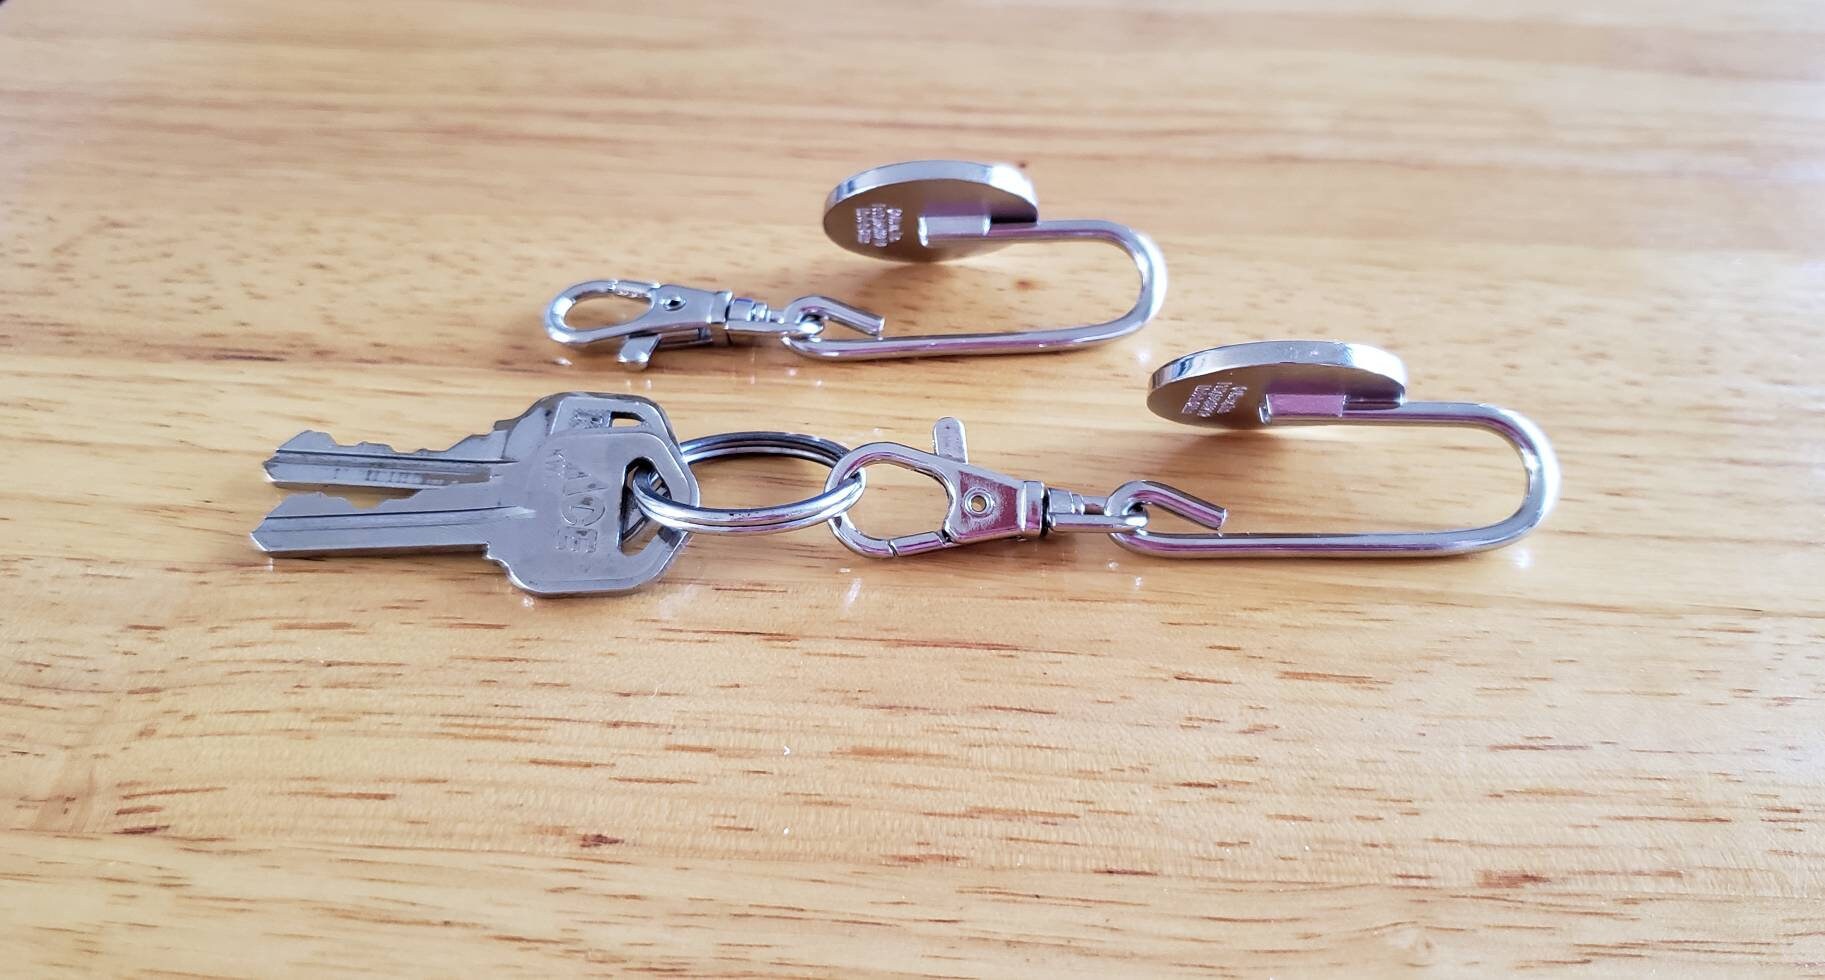 Wonder Woman Key Finder Key Chain Find Keys Quickly Key Hook Hooks on Purse  or Pocket Hanger Holder Gift Women Ladies Handbag Charm Keychain 